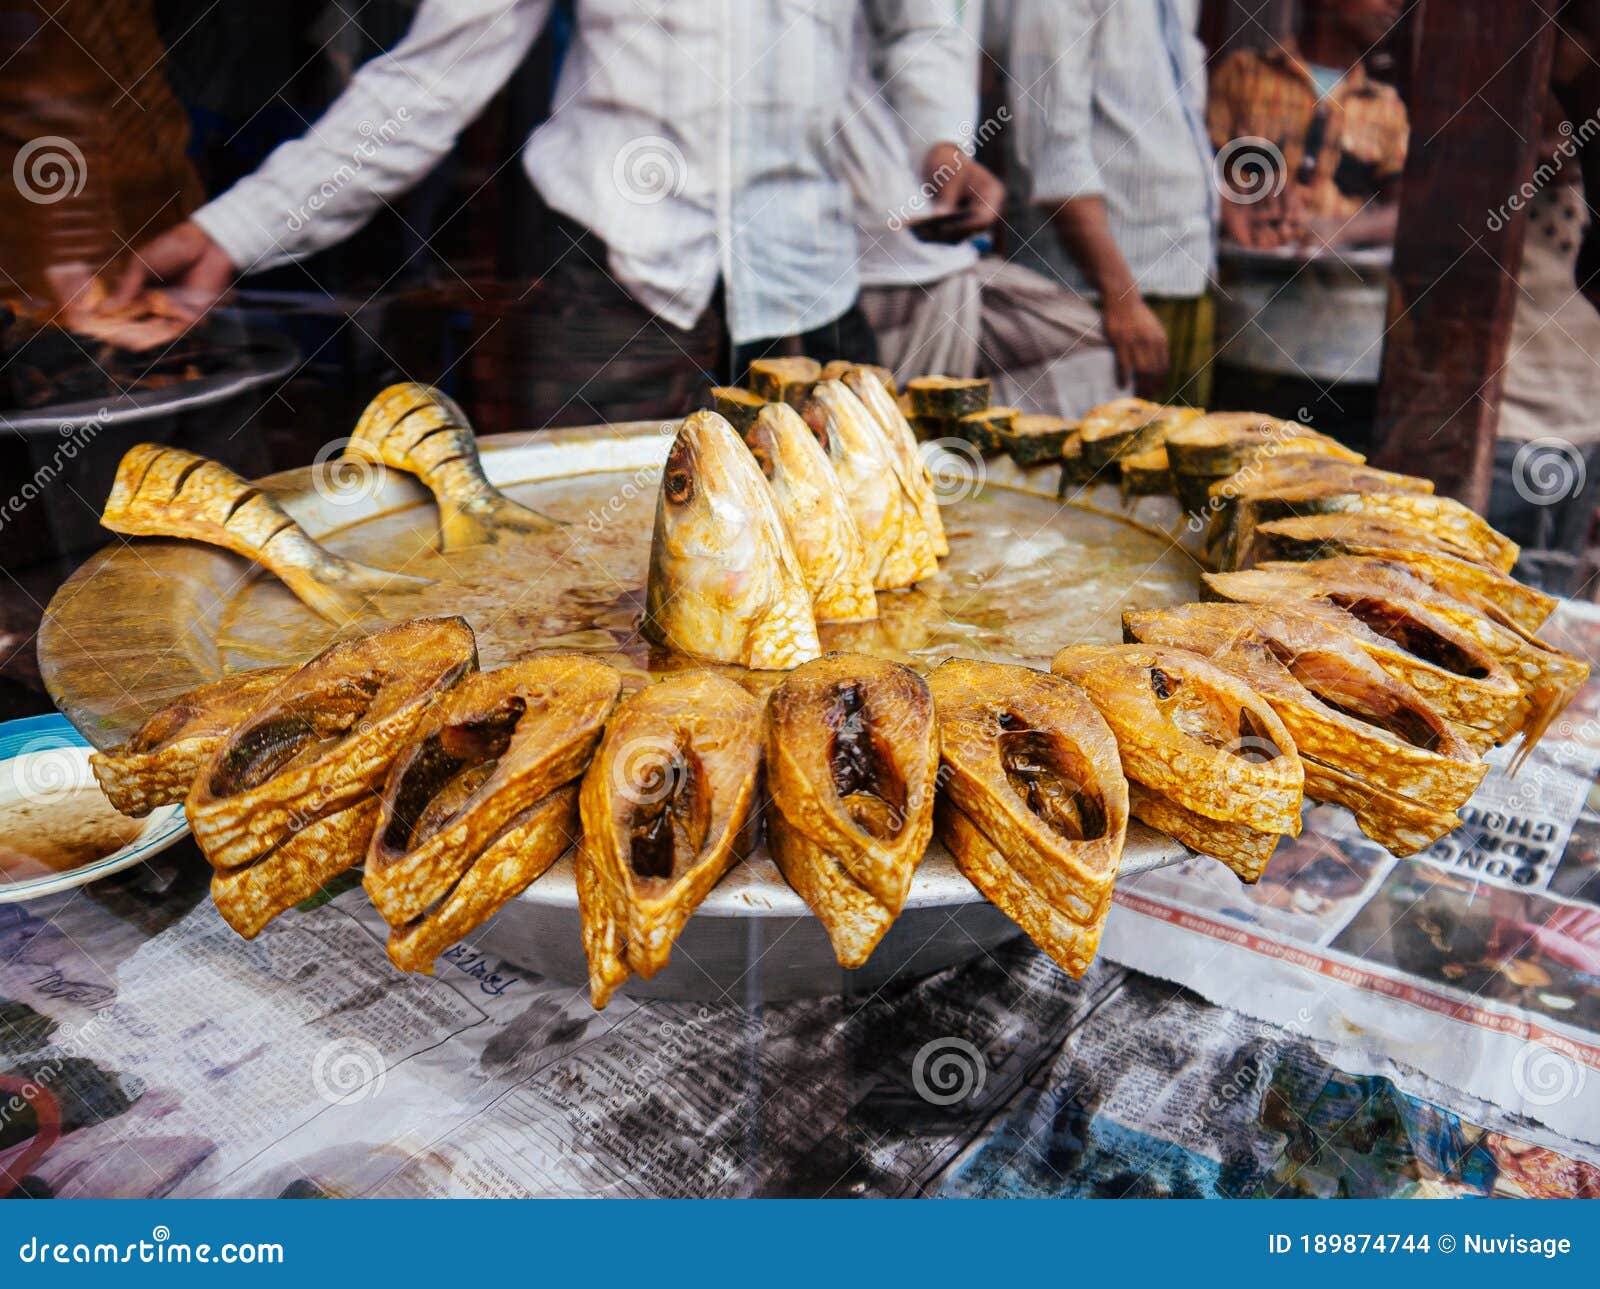 Bangladesh street food fish stew - Bengali local food in Dhaka city market. FEB 16, 2020 Dhaka, Bangladesh - Bangladesh street food fish stew on metal tray - Bengali local food selling in Dhaka city market